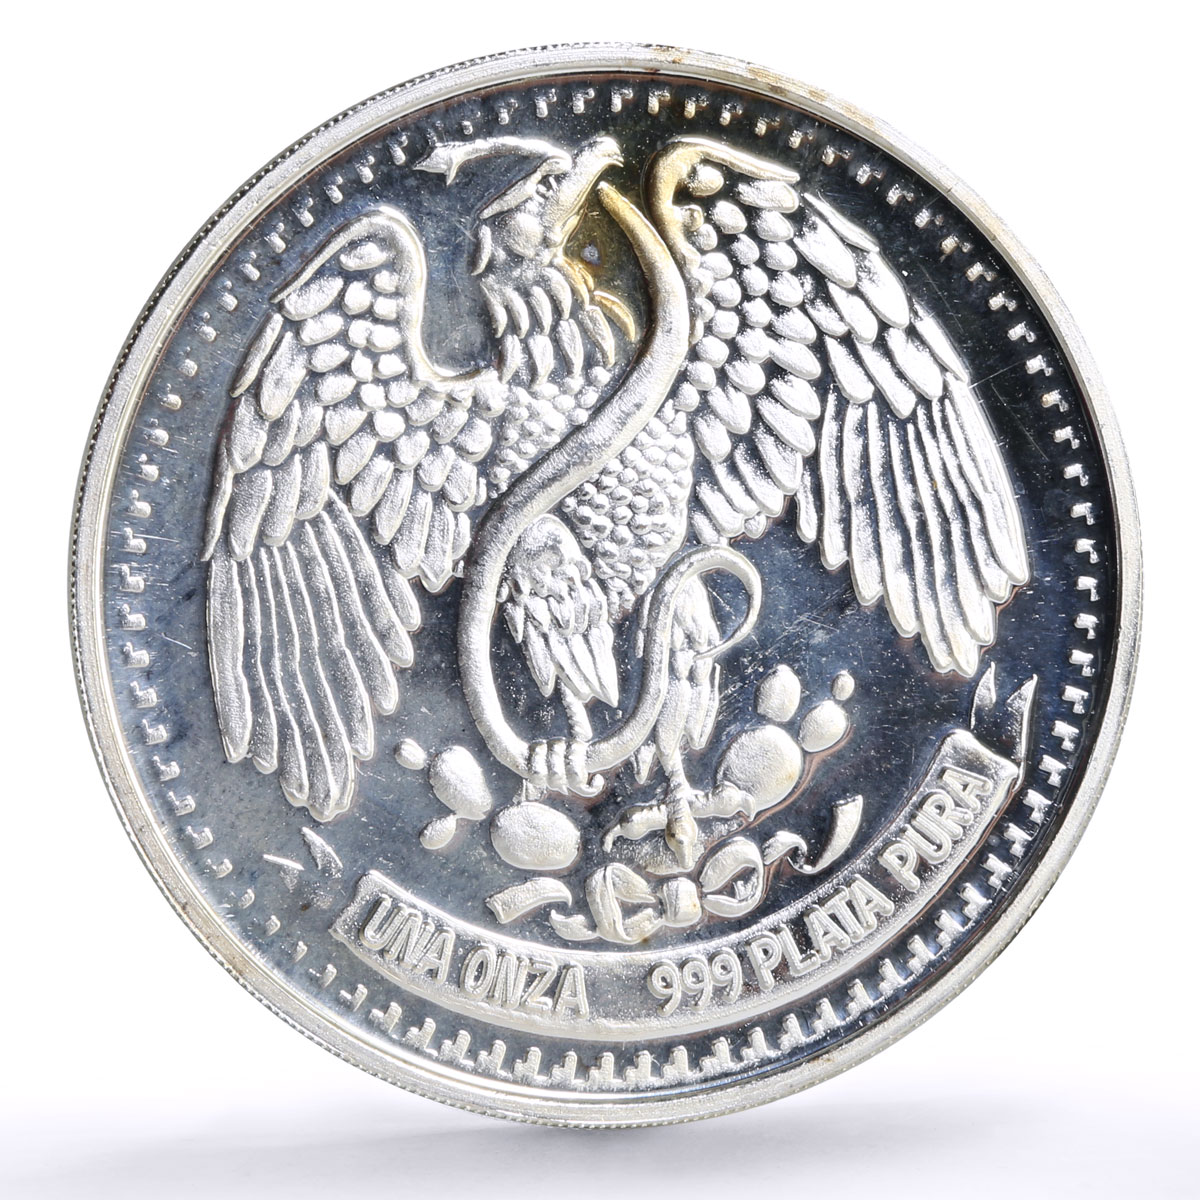 Mexico 1 onza Precolombina Olmeca Stone Head Facing proof silver coin 1984